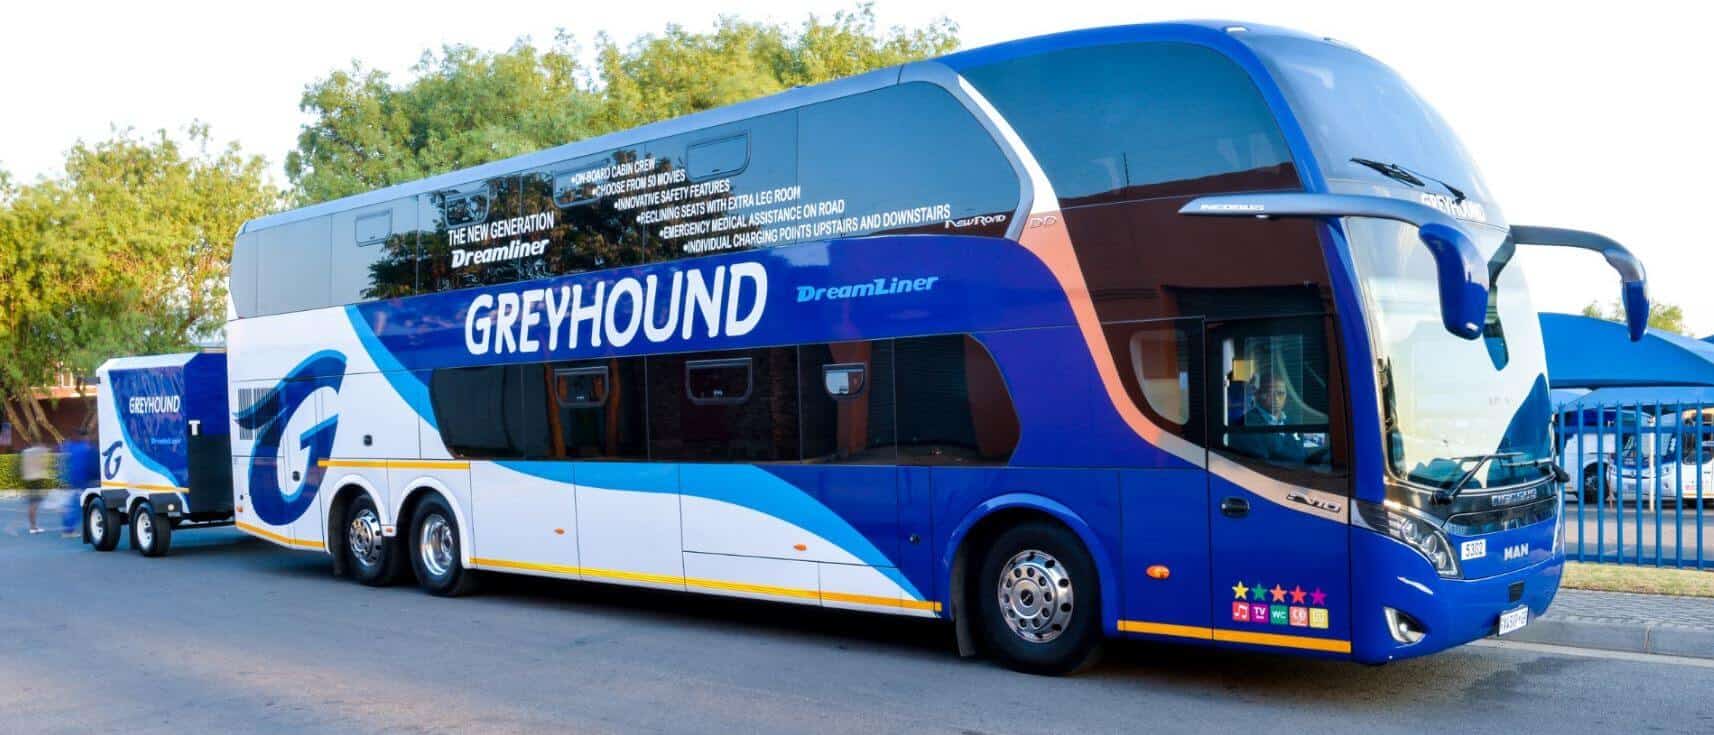 Greyhound bus service to depart on final trip